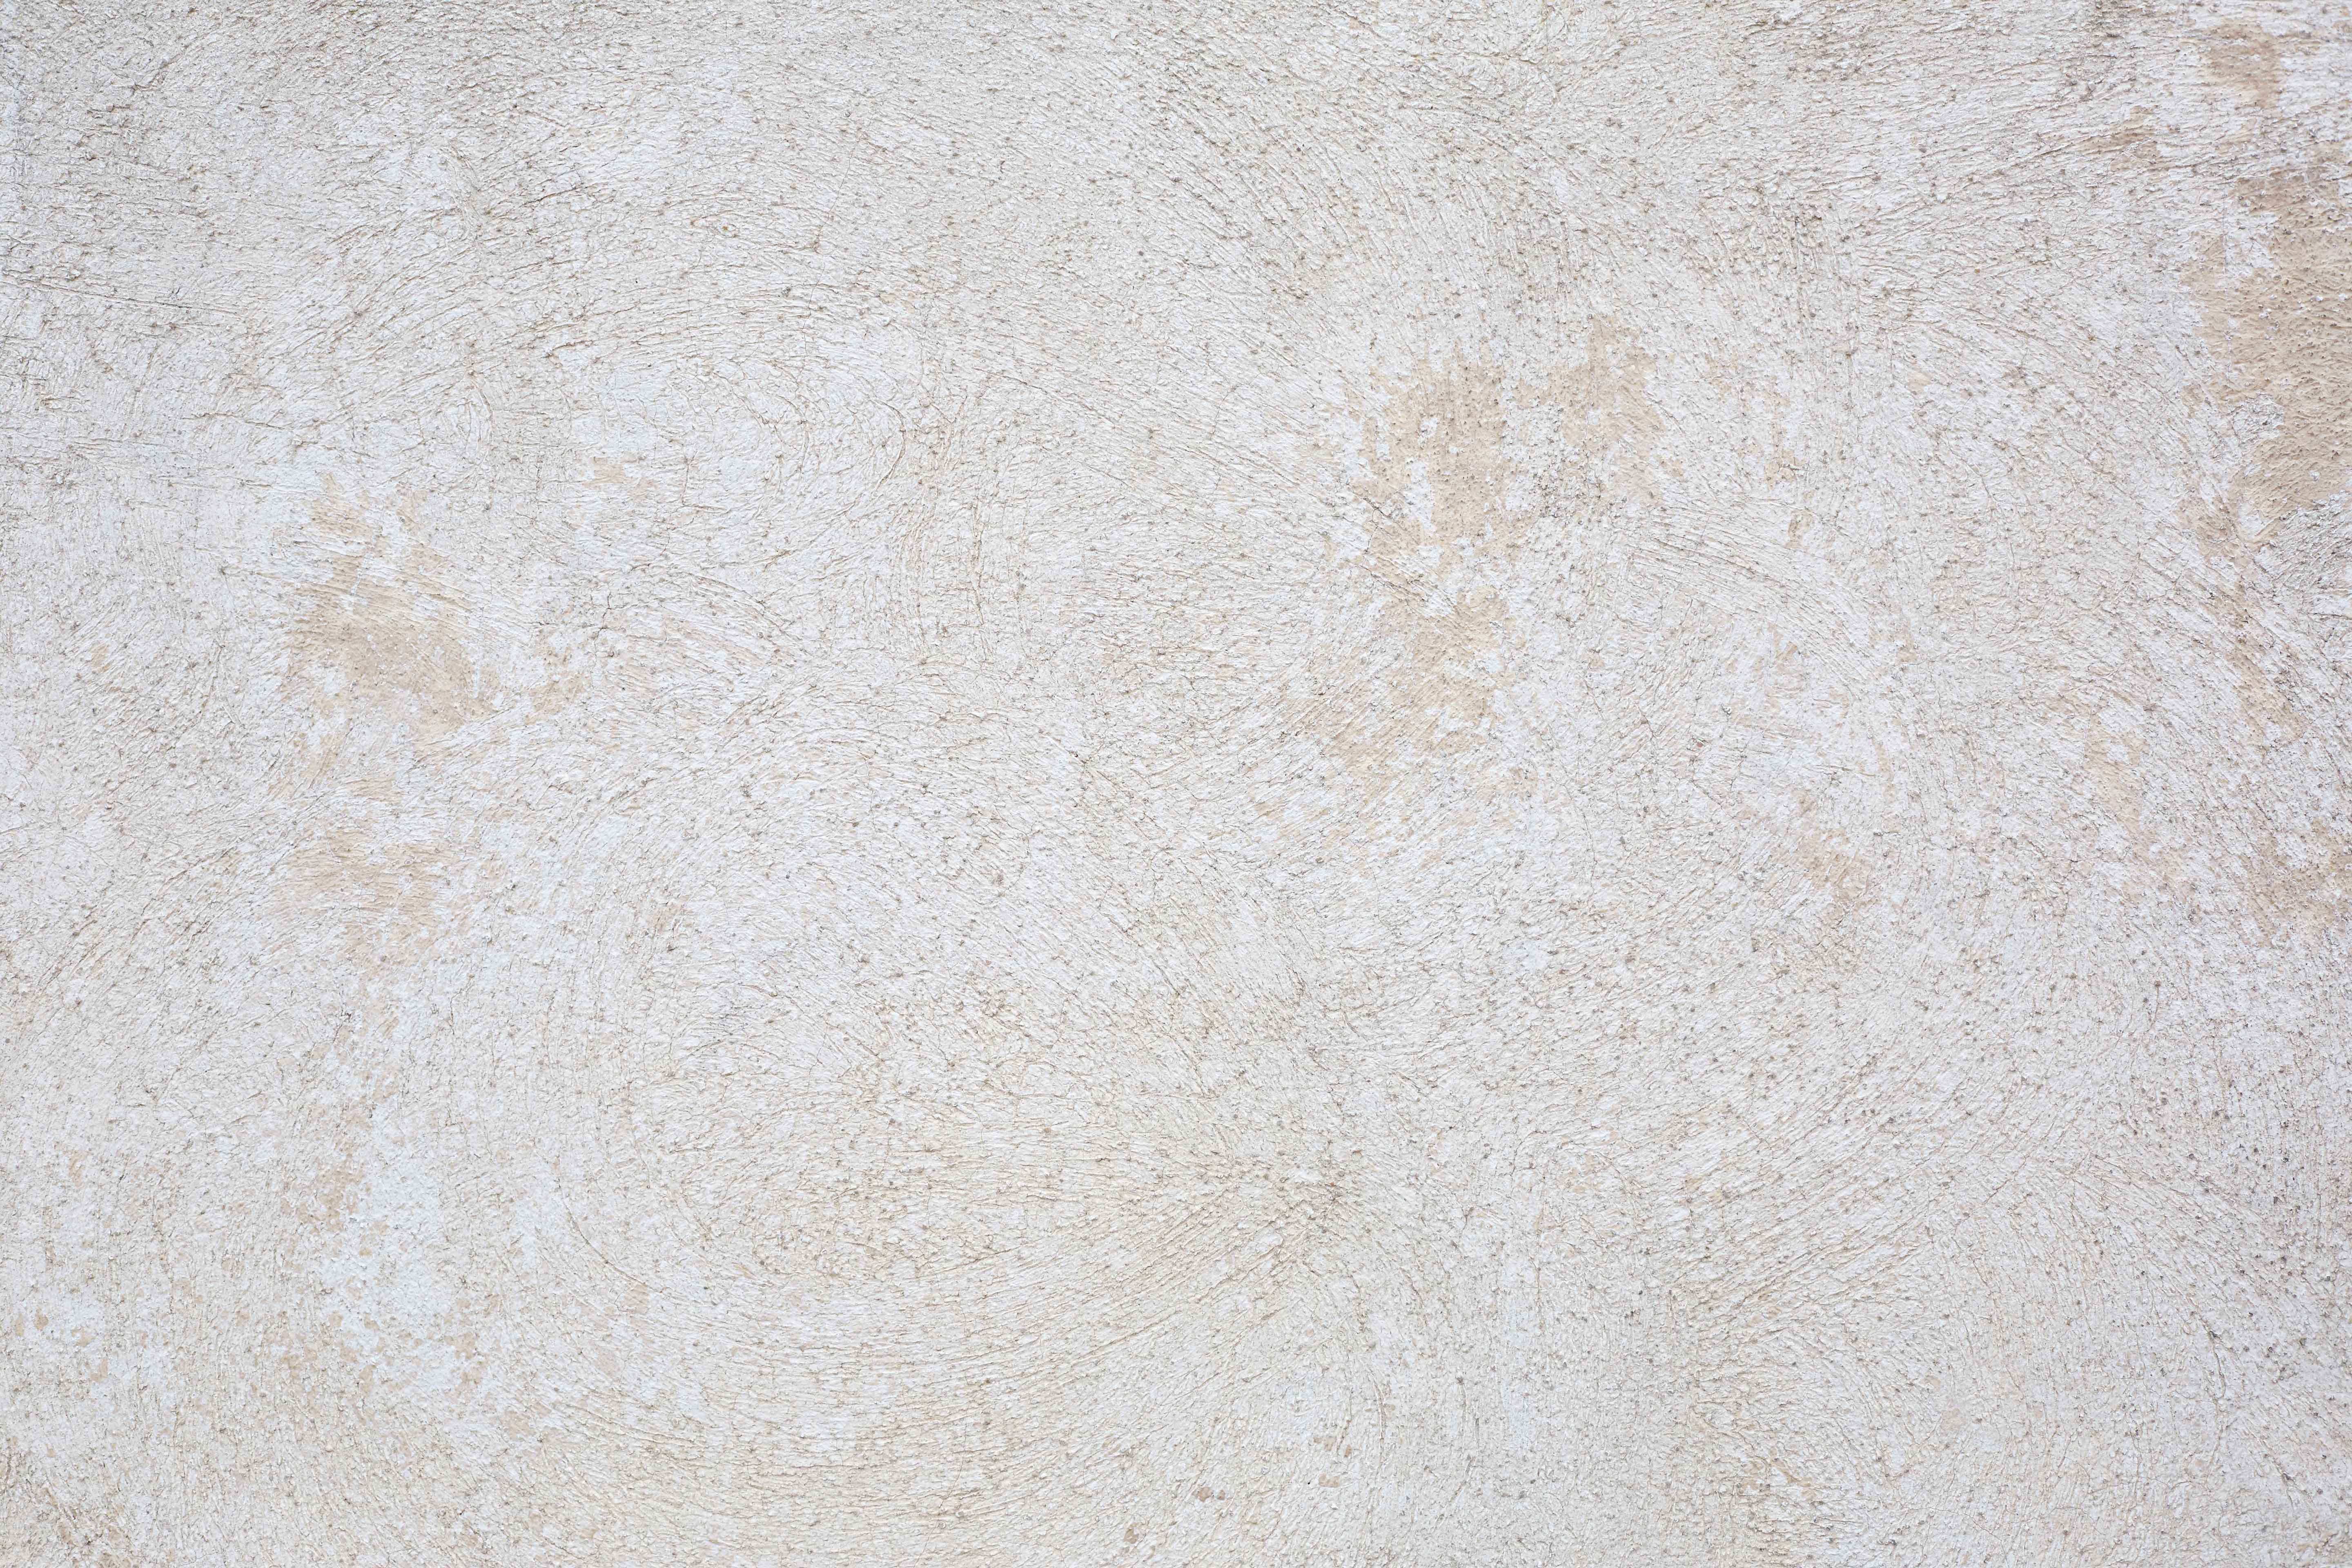 r243-white-beige-cement-wall-texture-background-2021-08-29-13-13-10-utc-copy.jpg